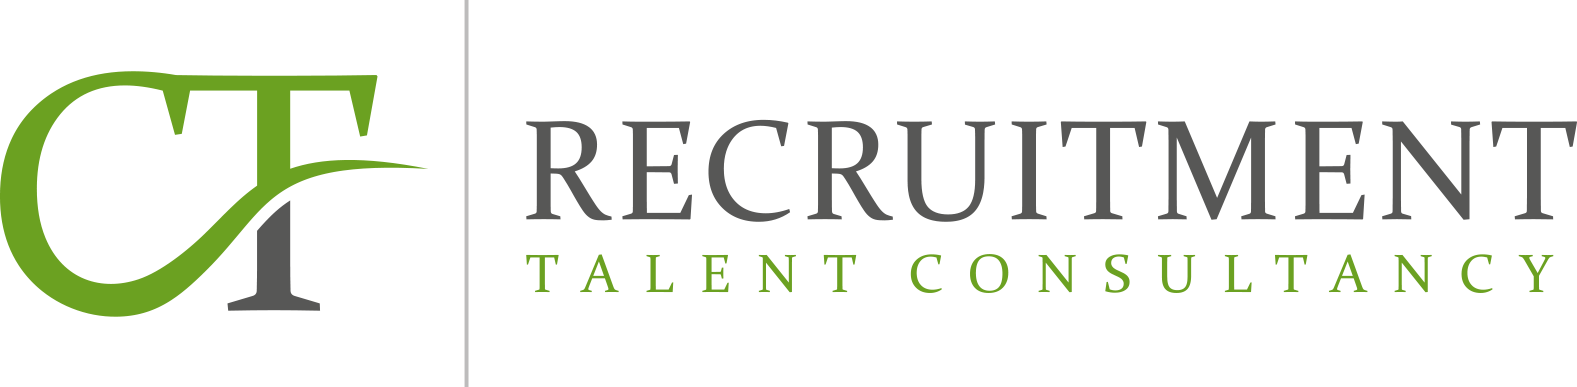 CT recruitment logo